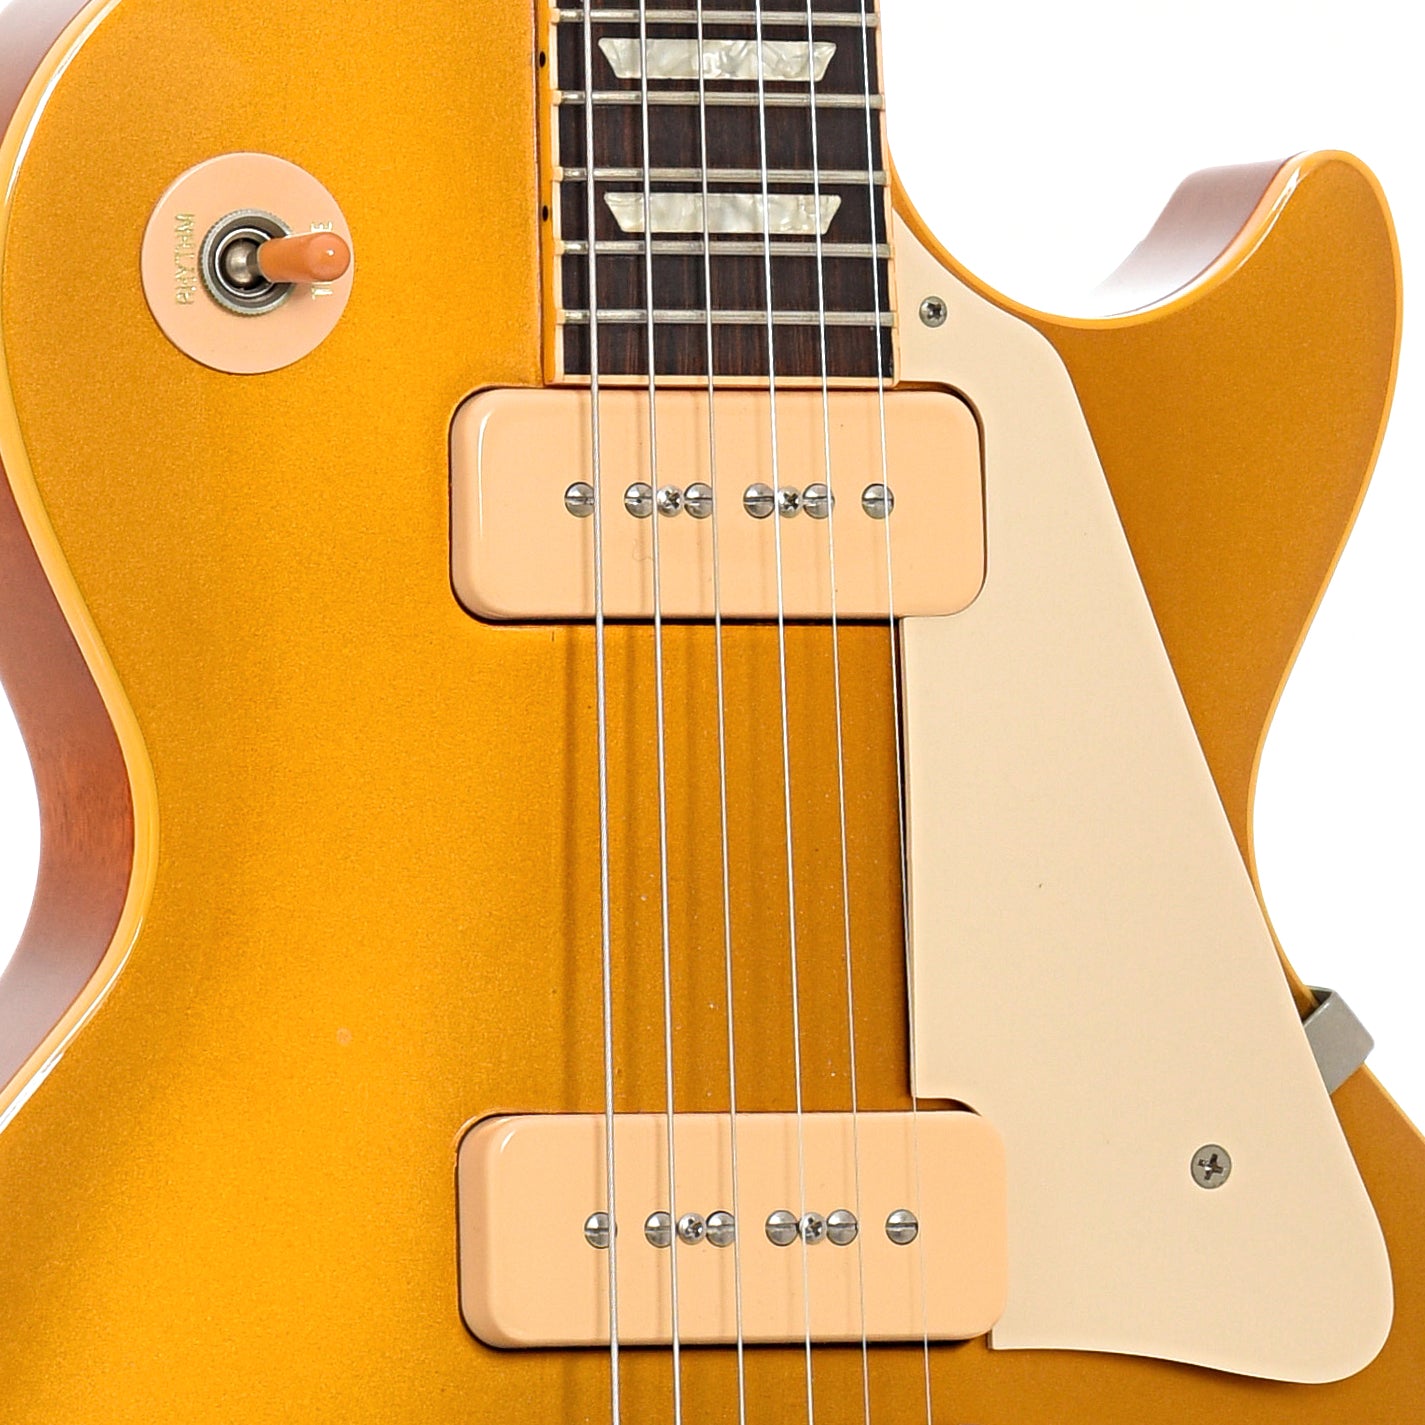 Pickups of Gibson Les Paul Goldtop 